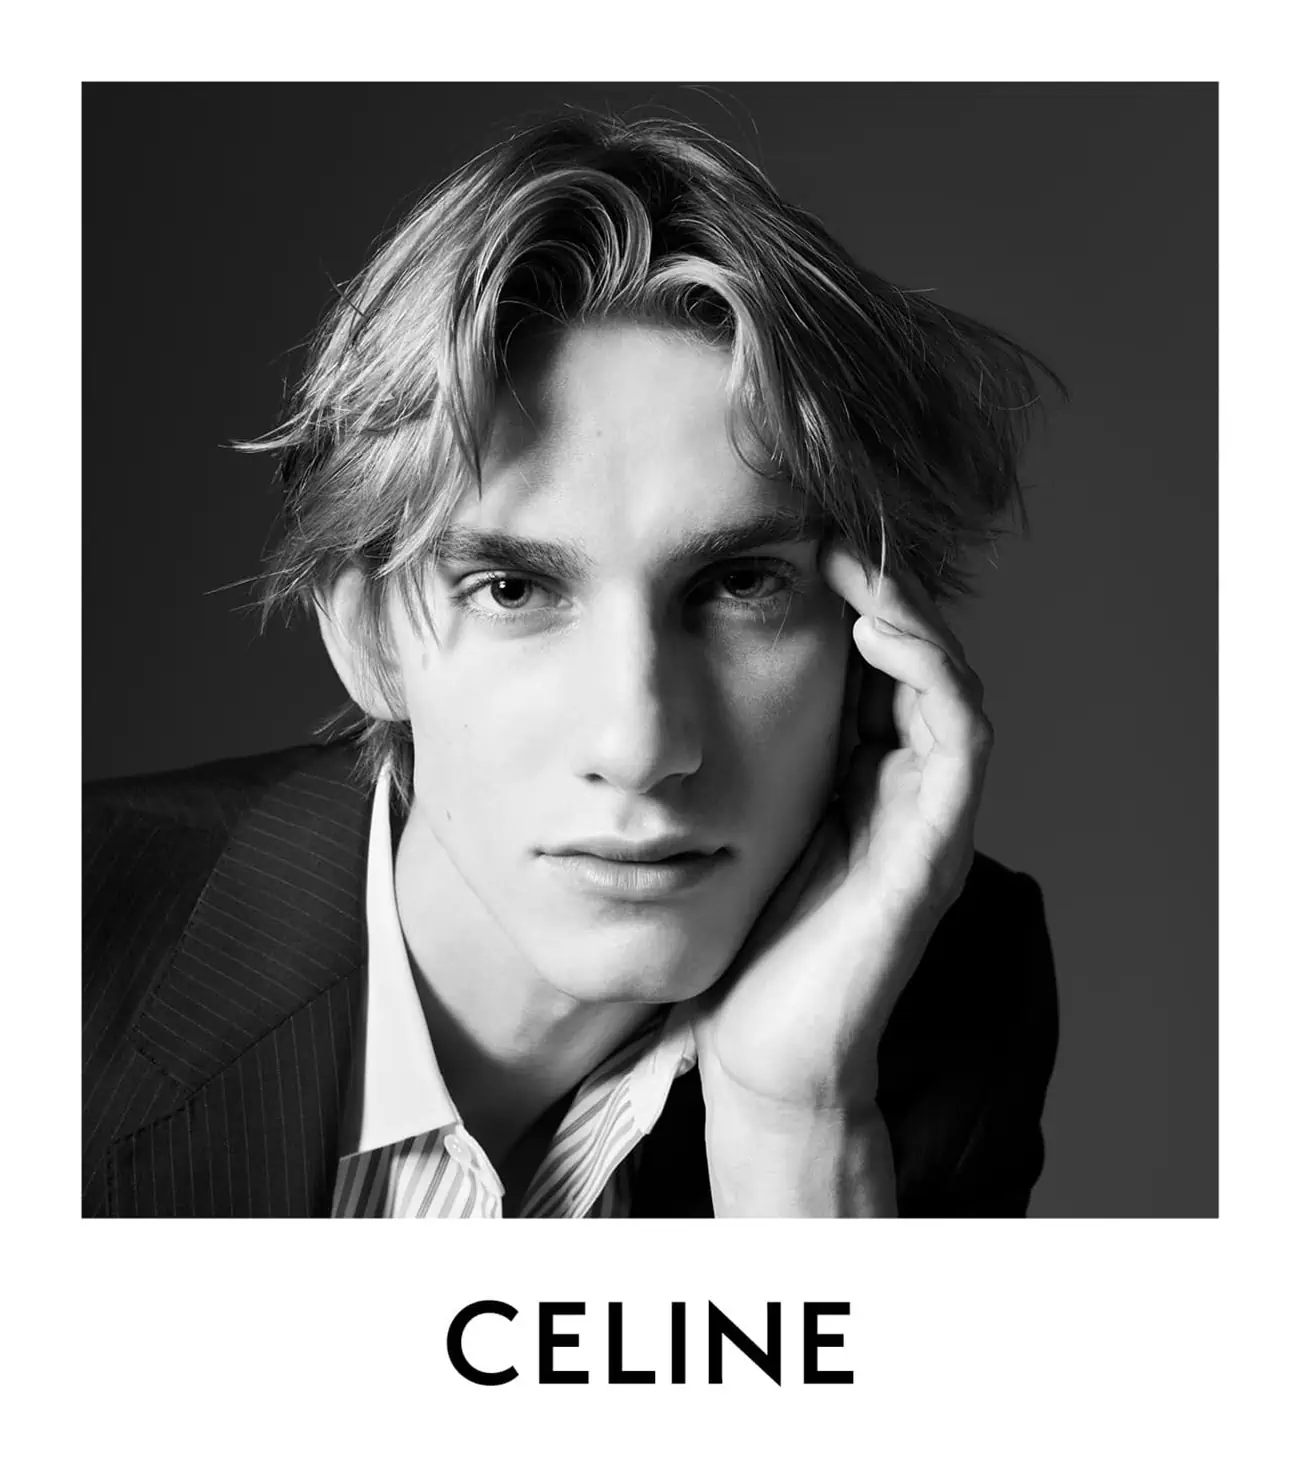 Levon Roan Thurman-Hawke stars in Celine Homme “Portrait of an Actor” campaign